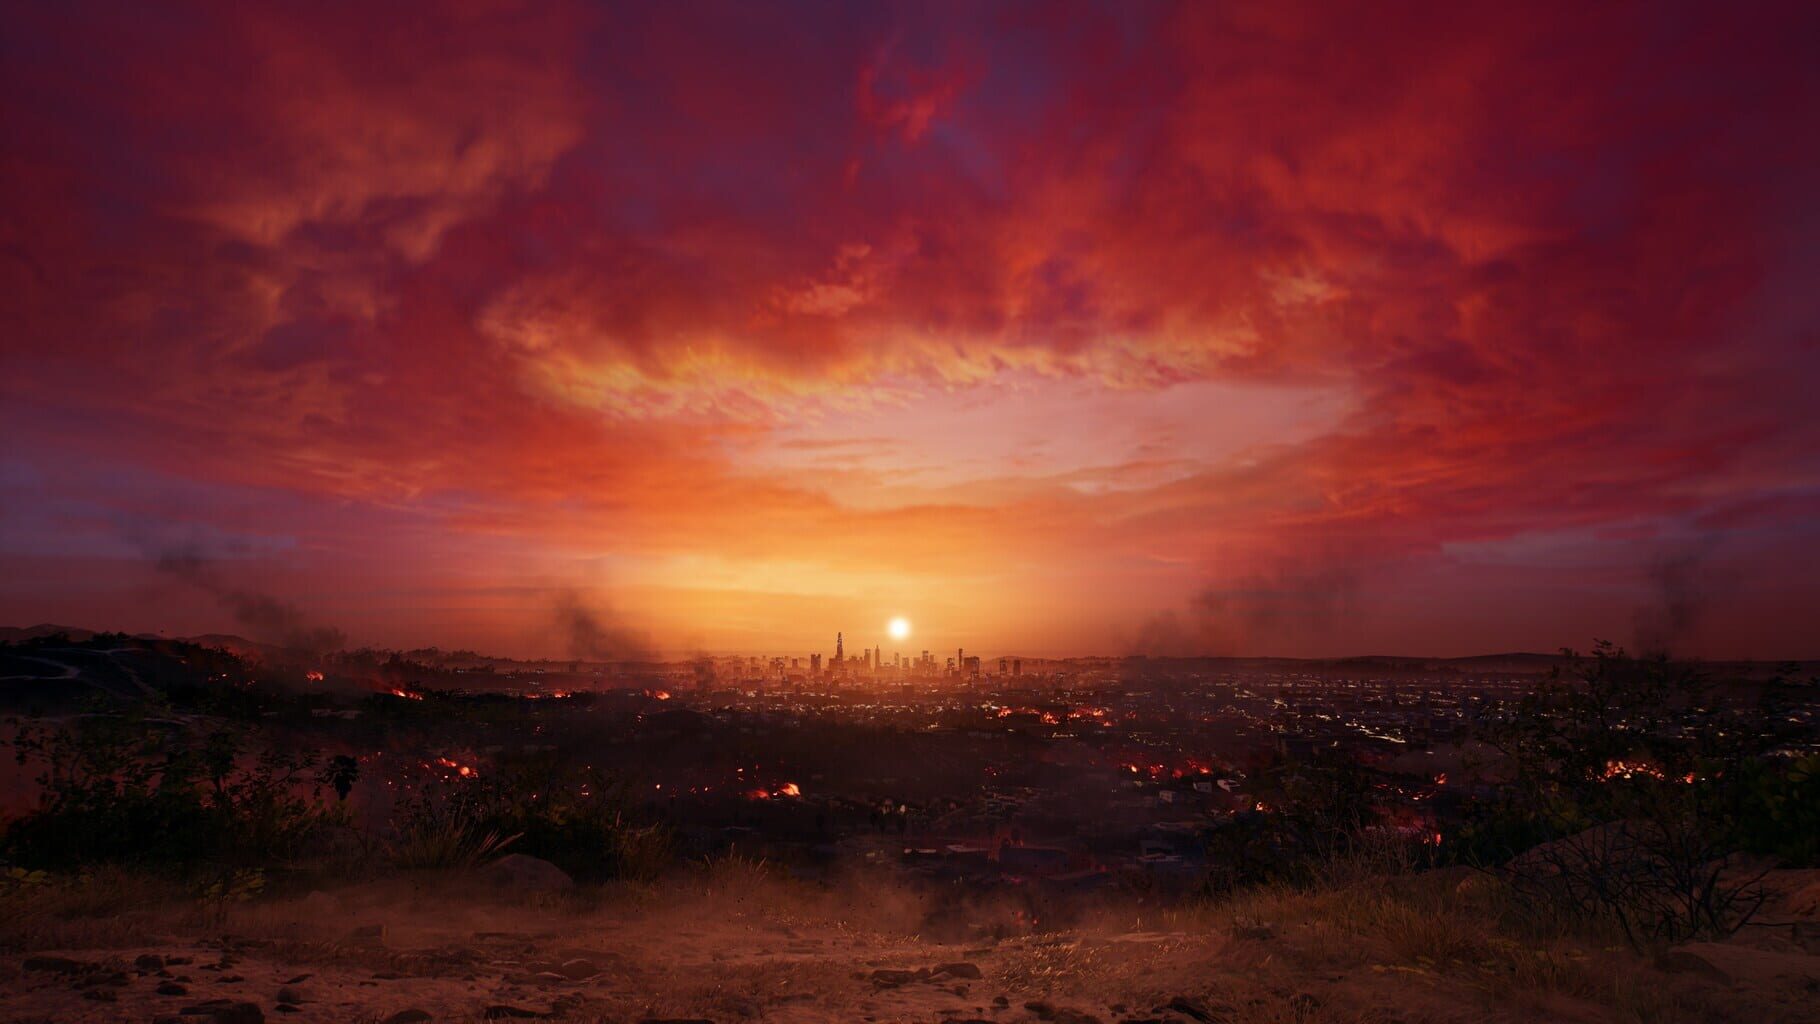 Screenshot for Dead Island 2